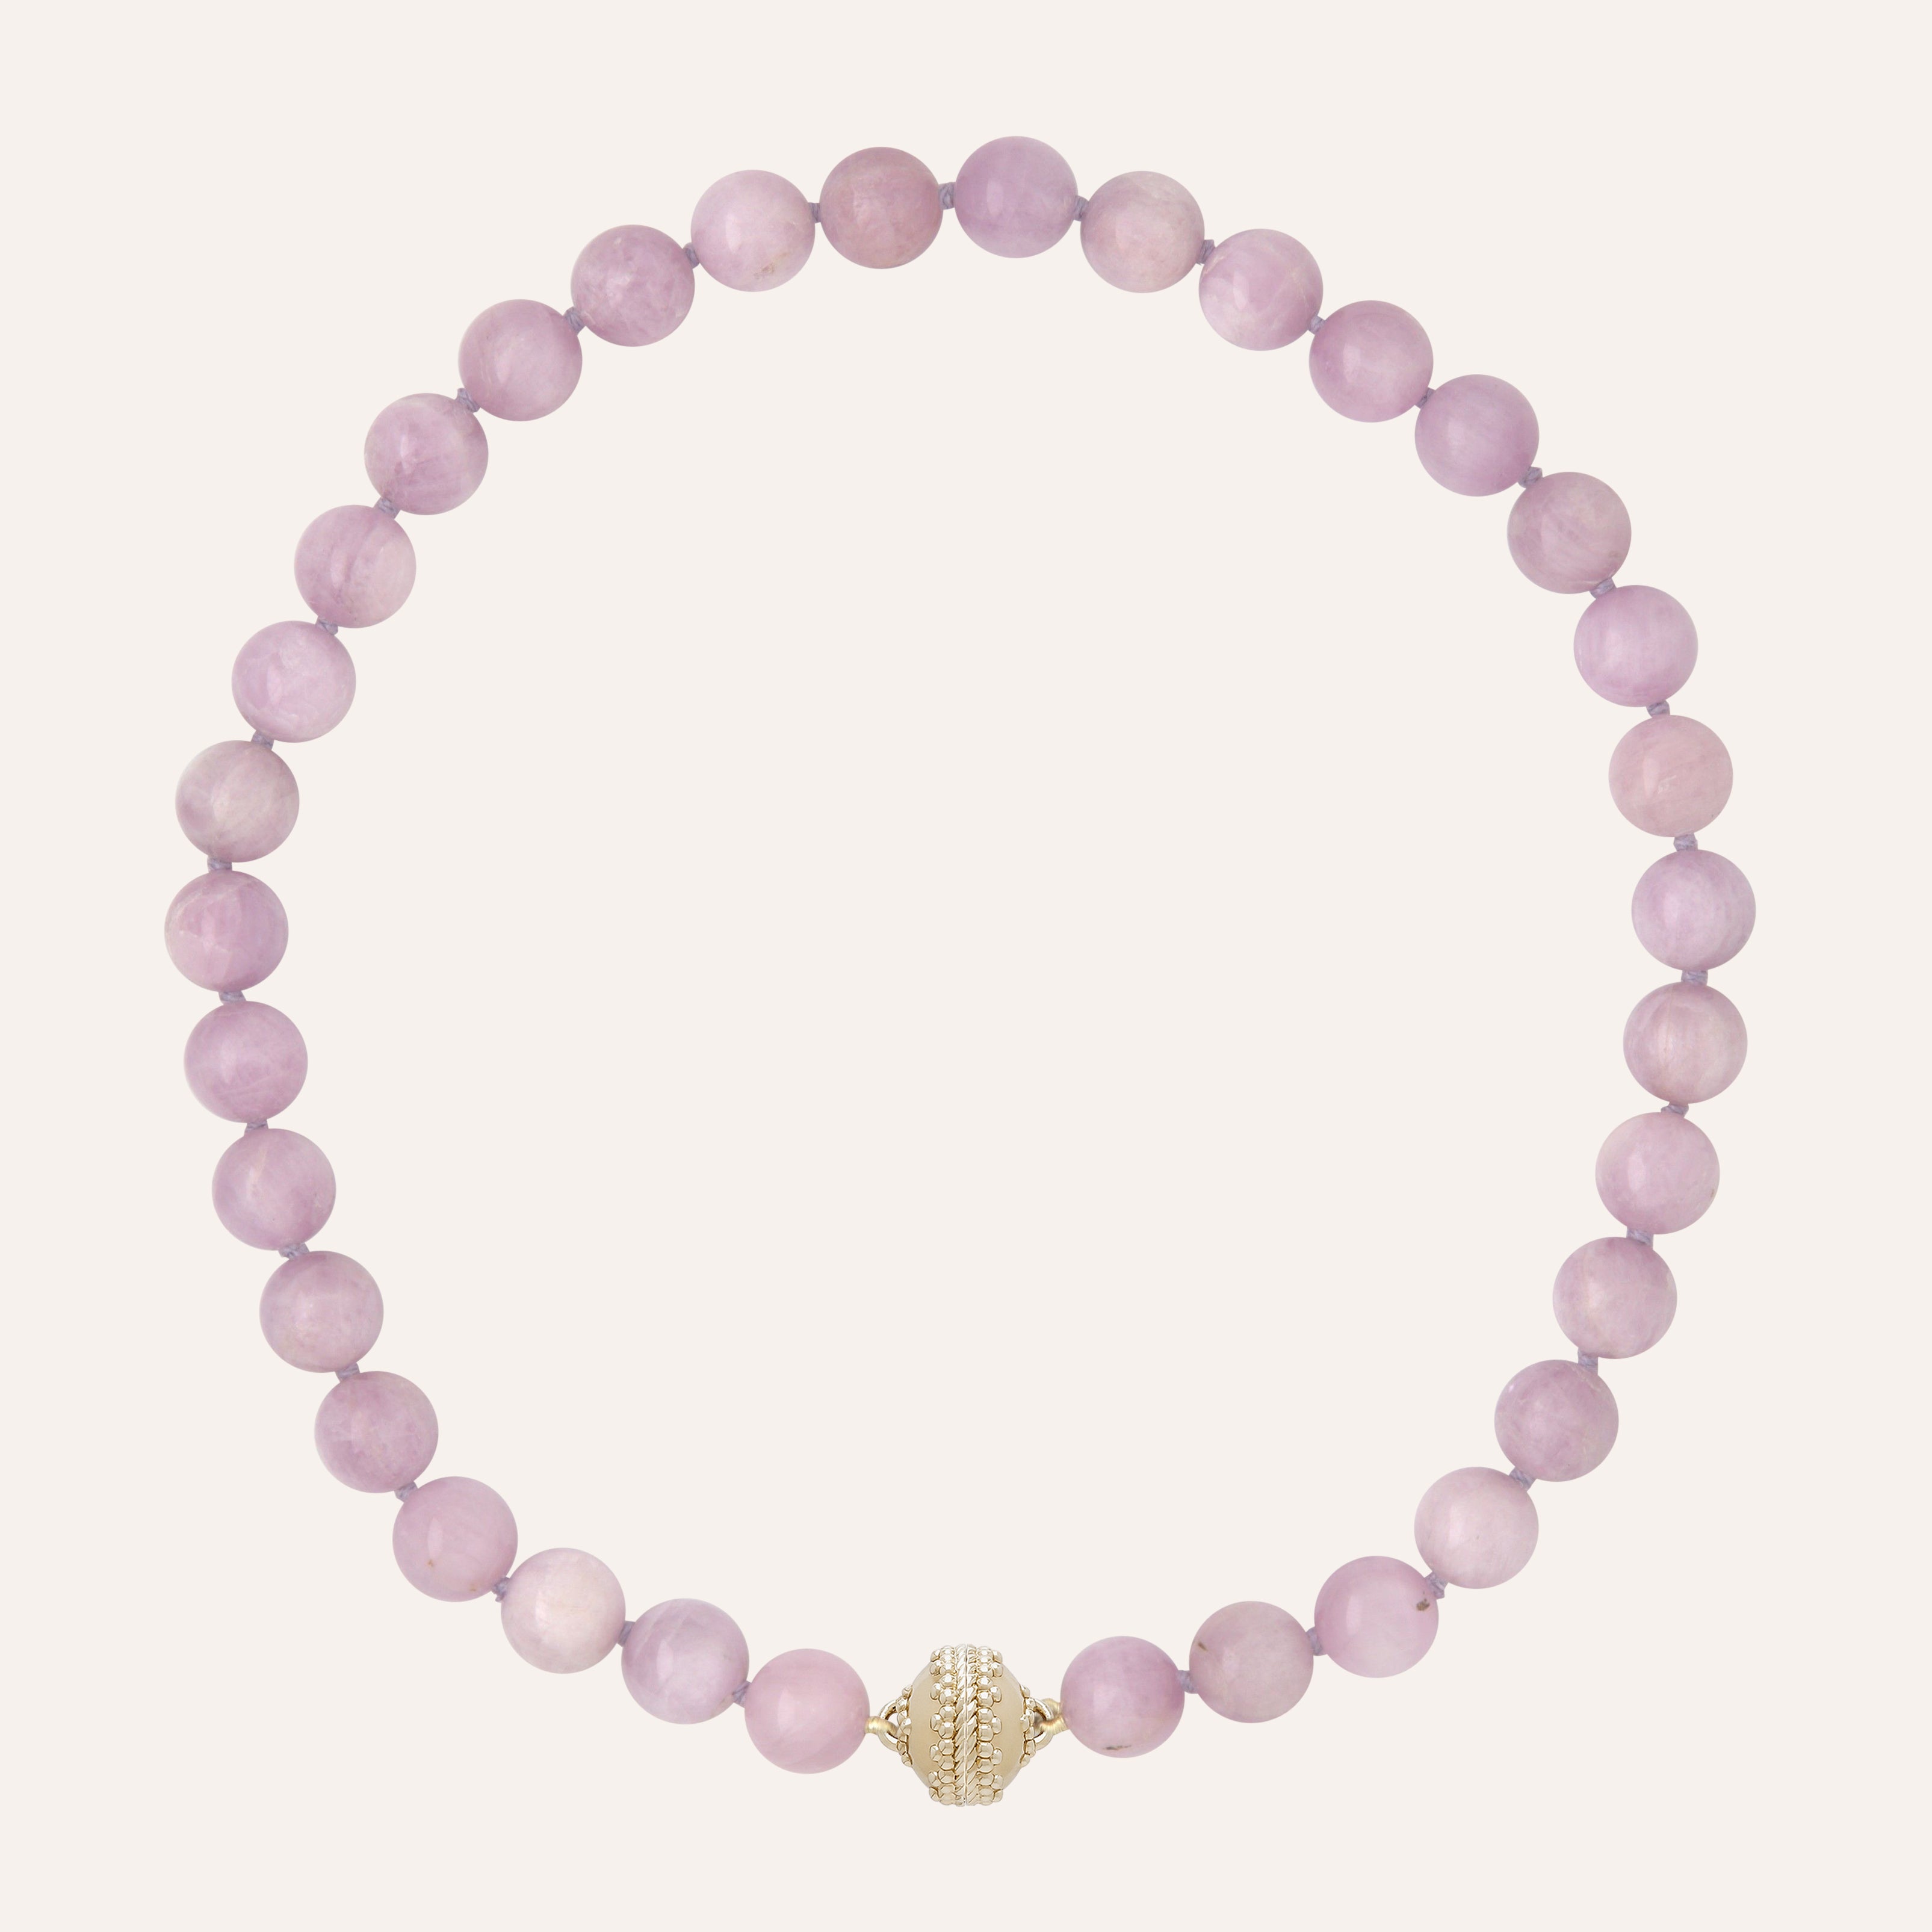 Victoire Pink Kunzite 11mm Necklace